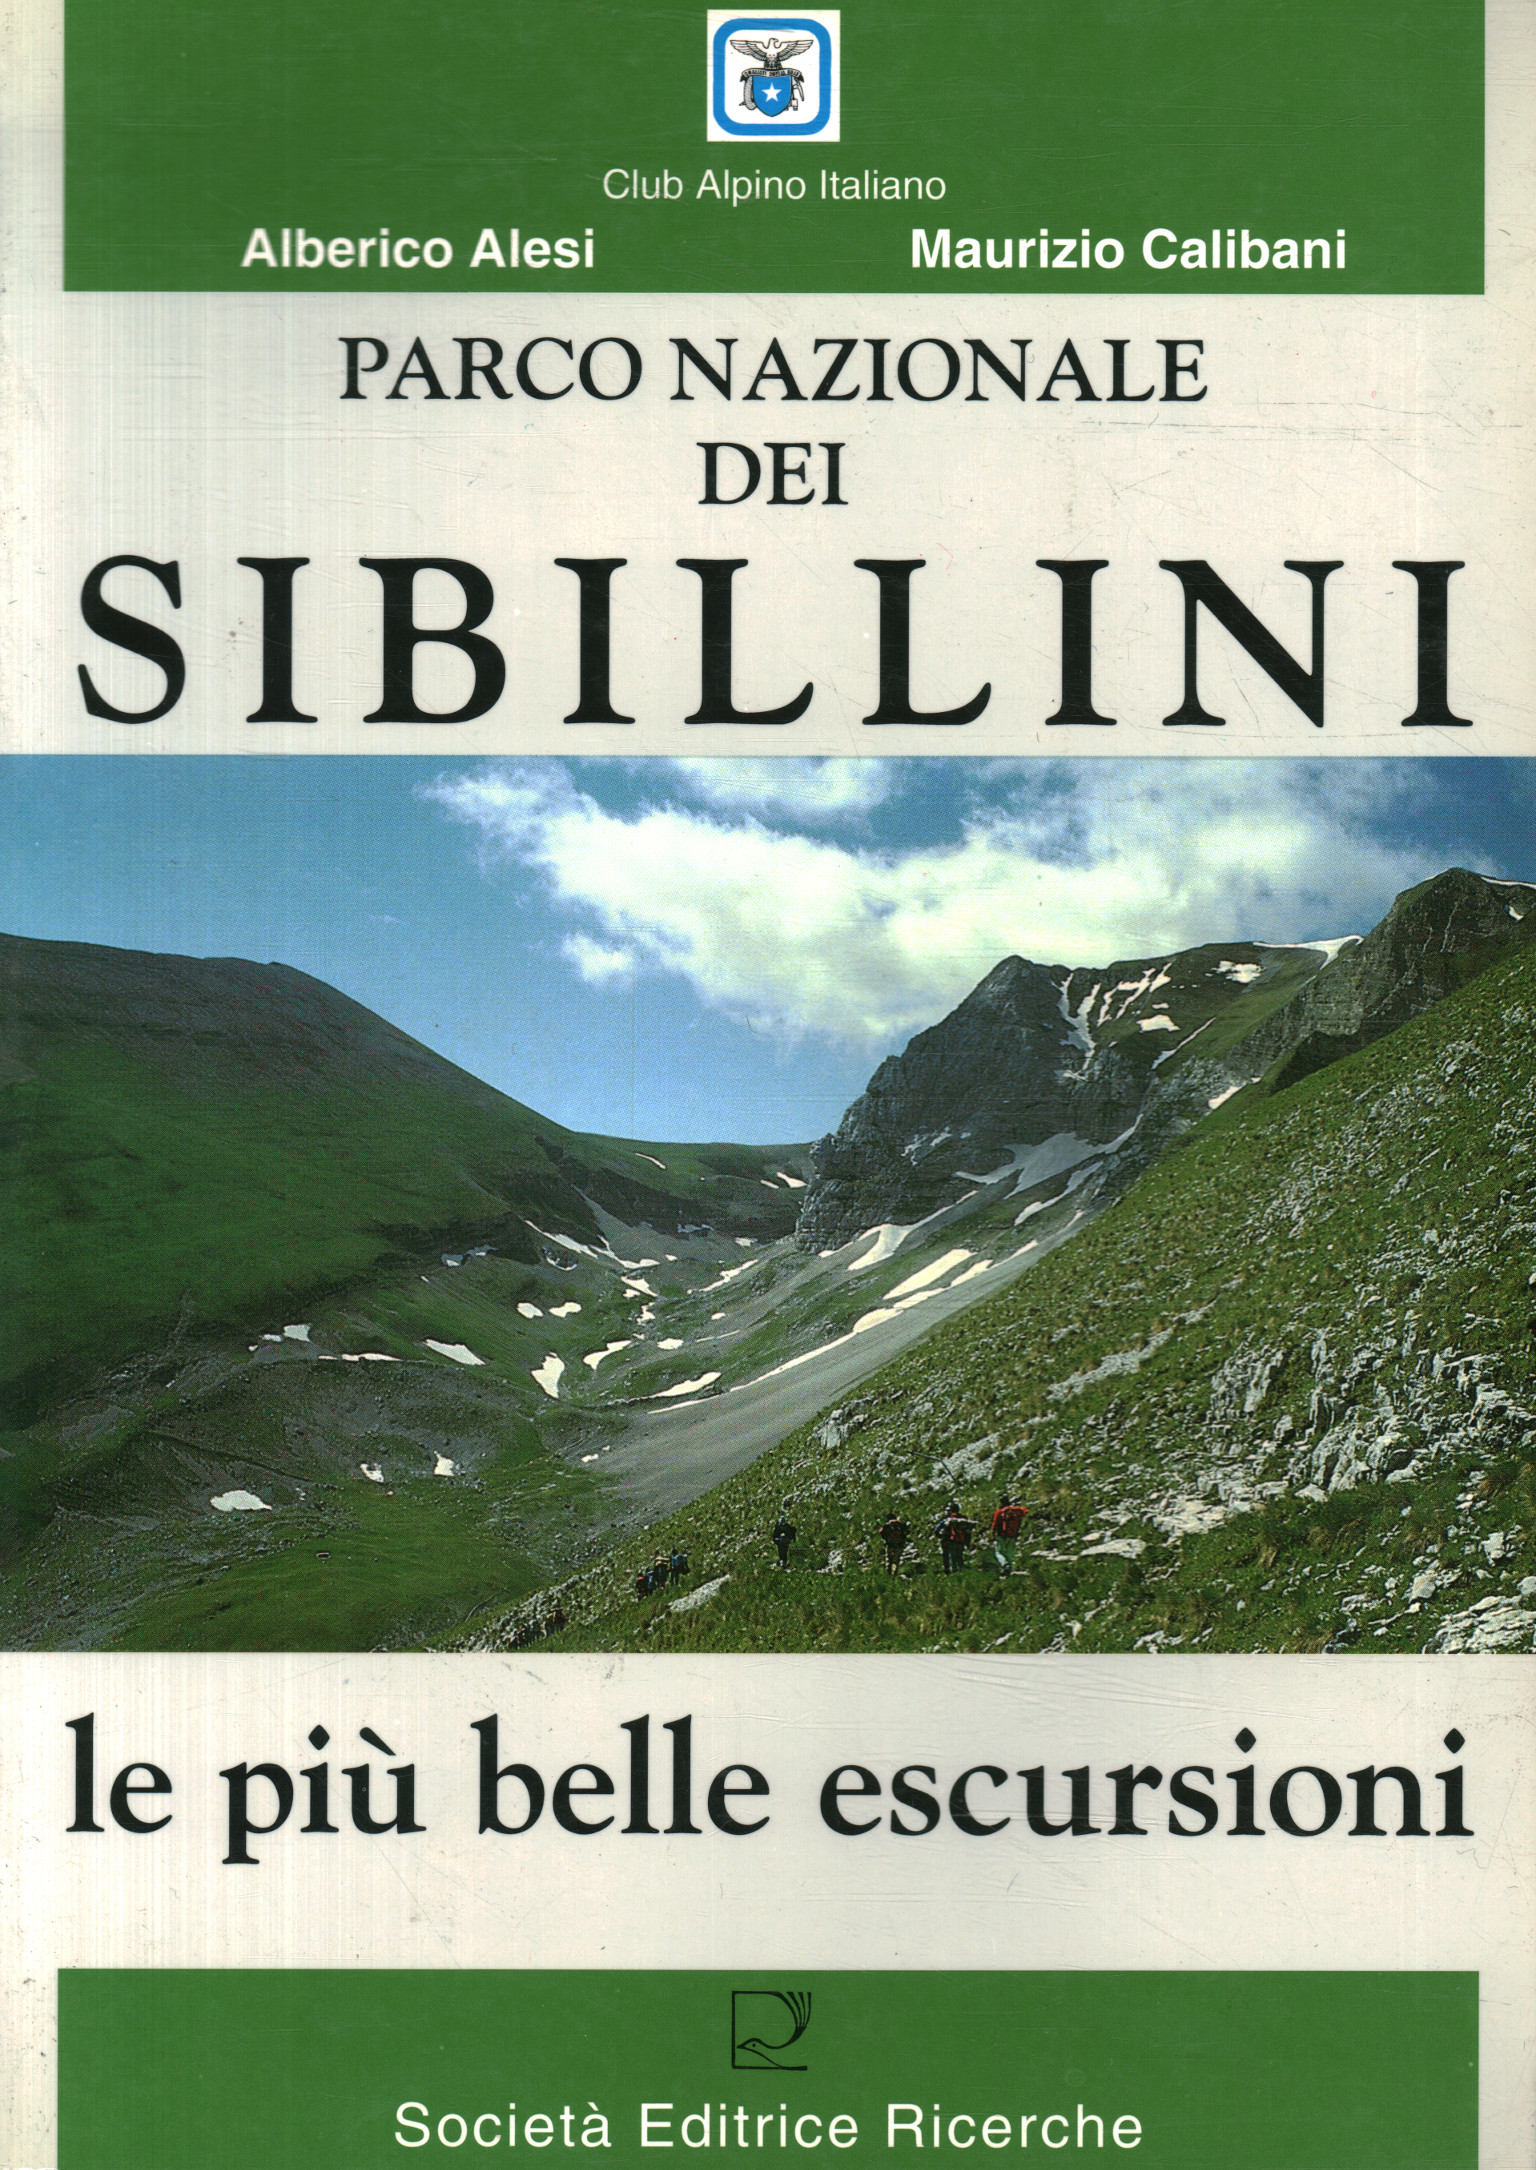 Parque Nacional Sibillini